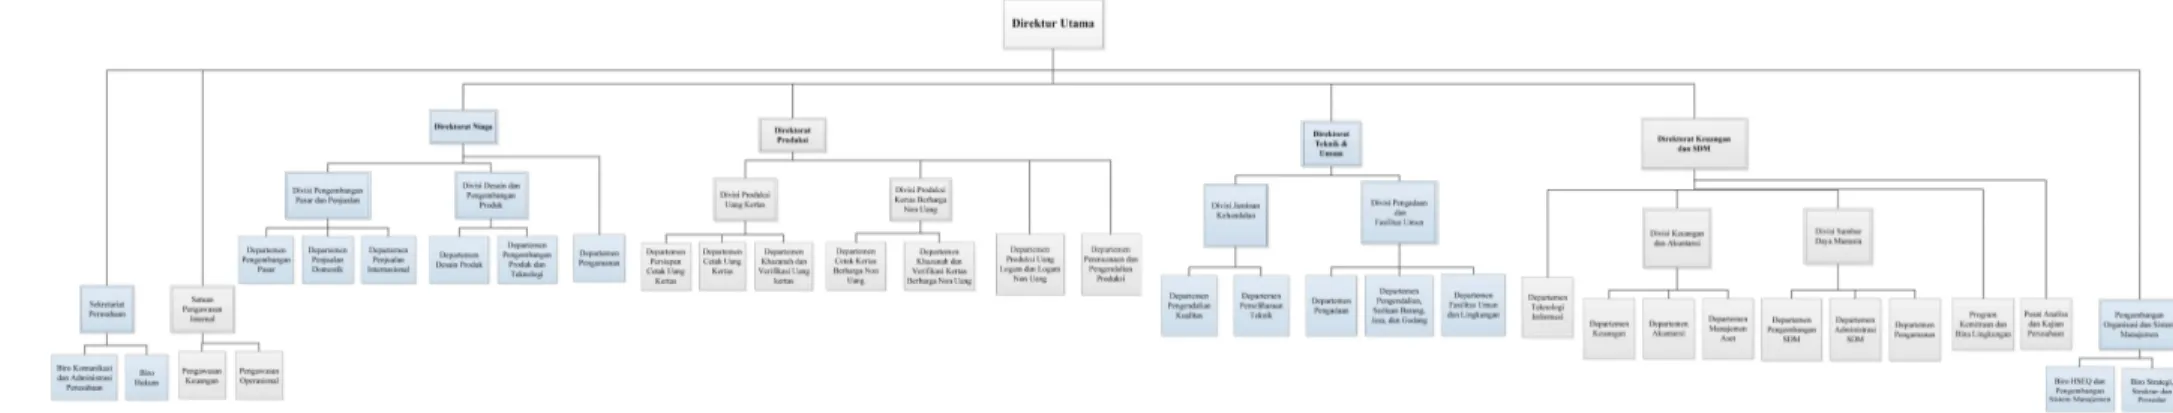 Gambar 9  Struktur Organisasi PERUM PERURI sampai Tingkat Departemen 